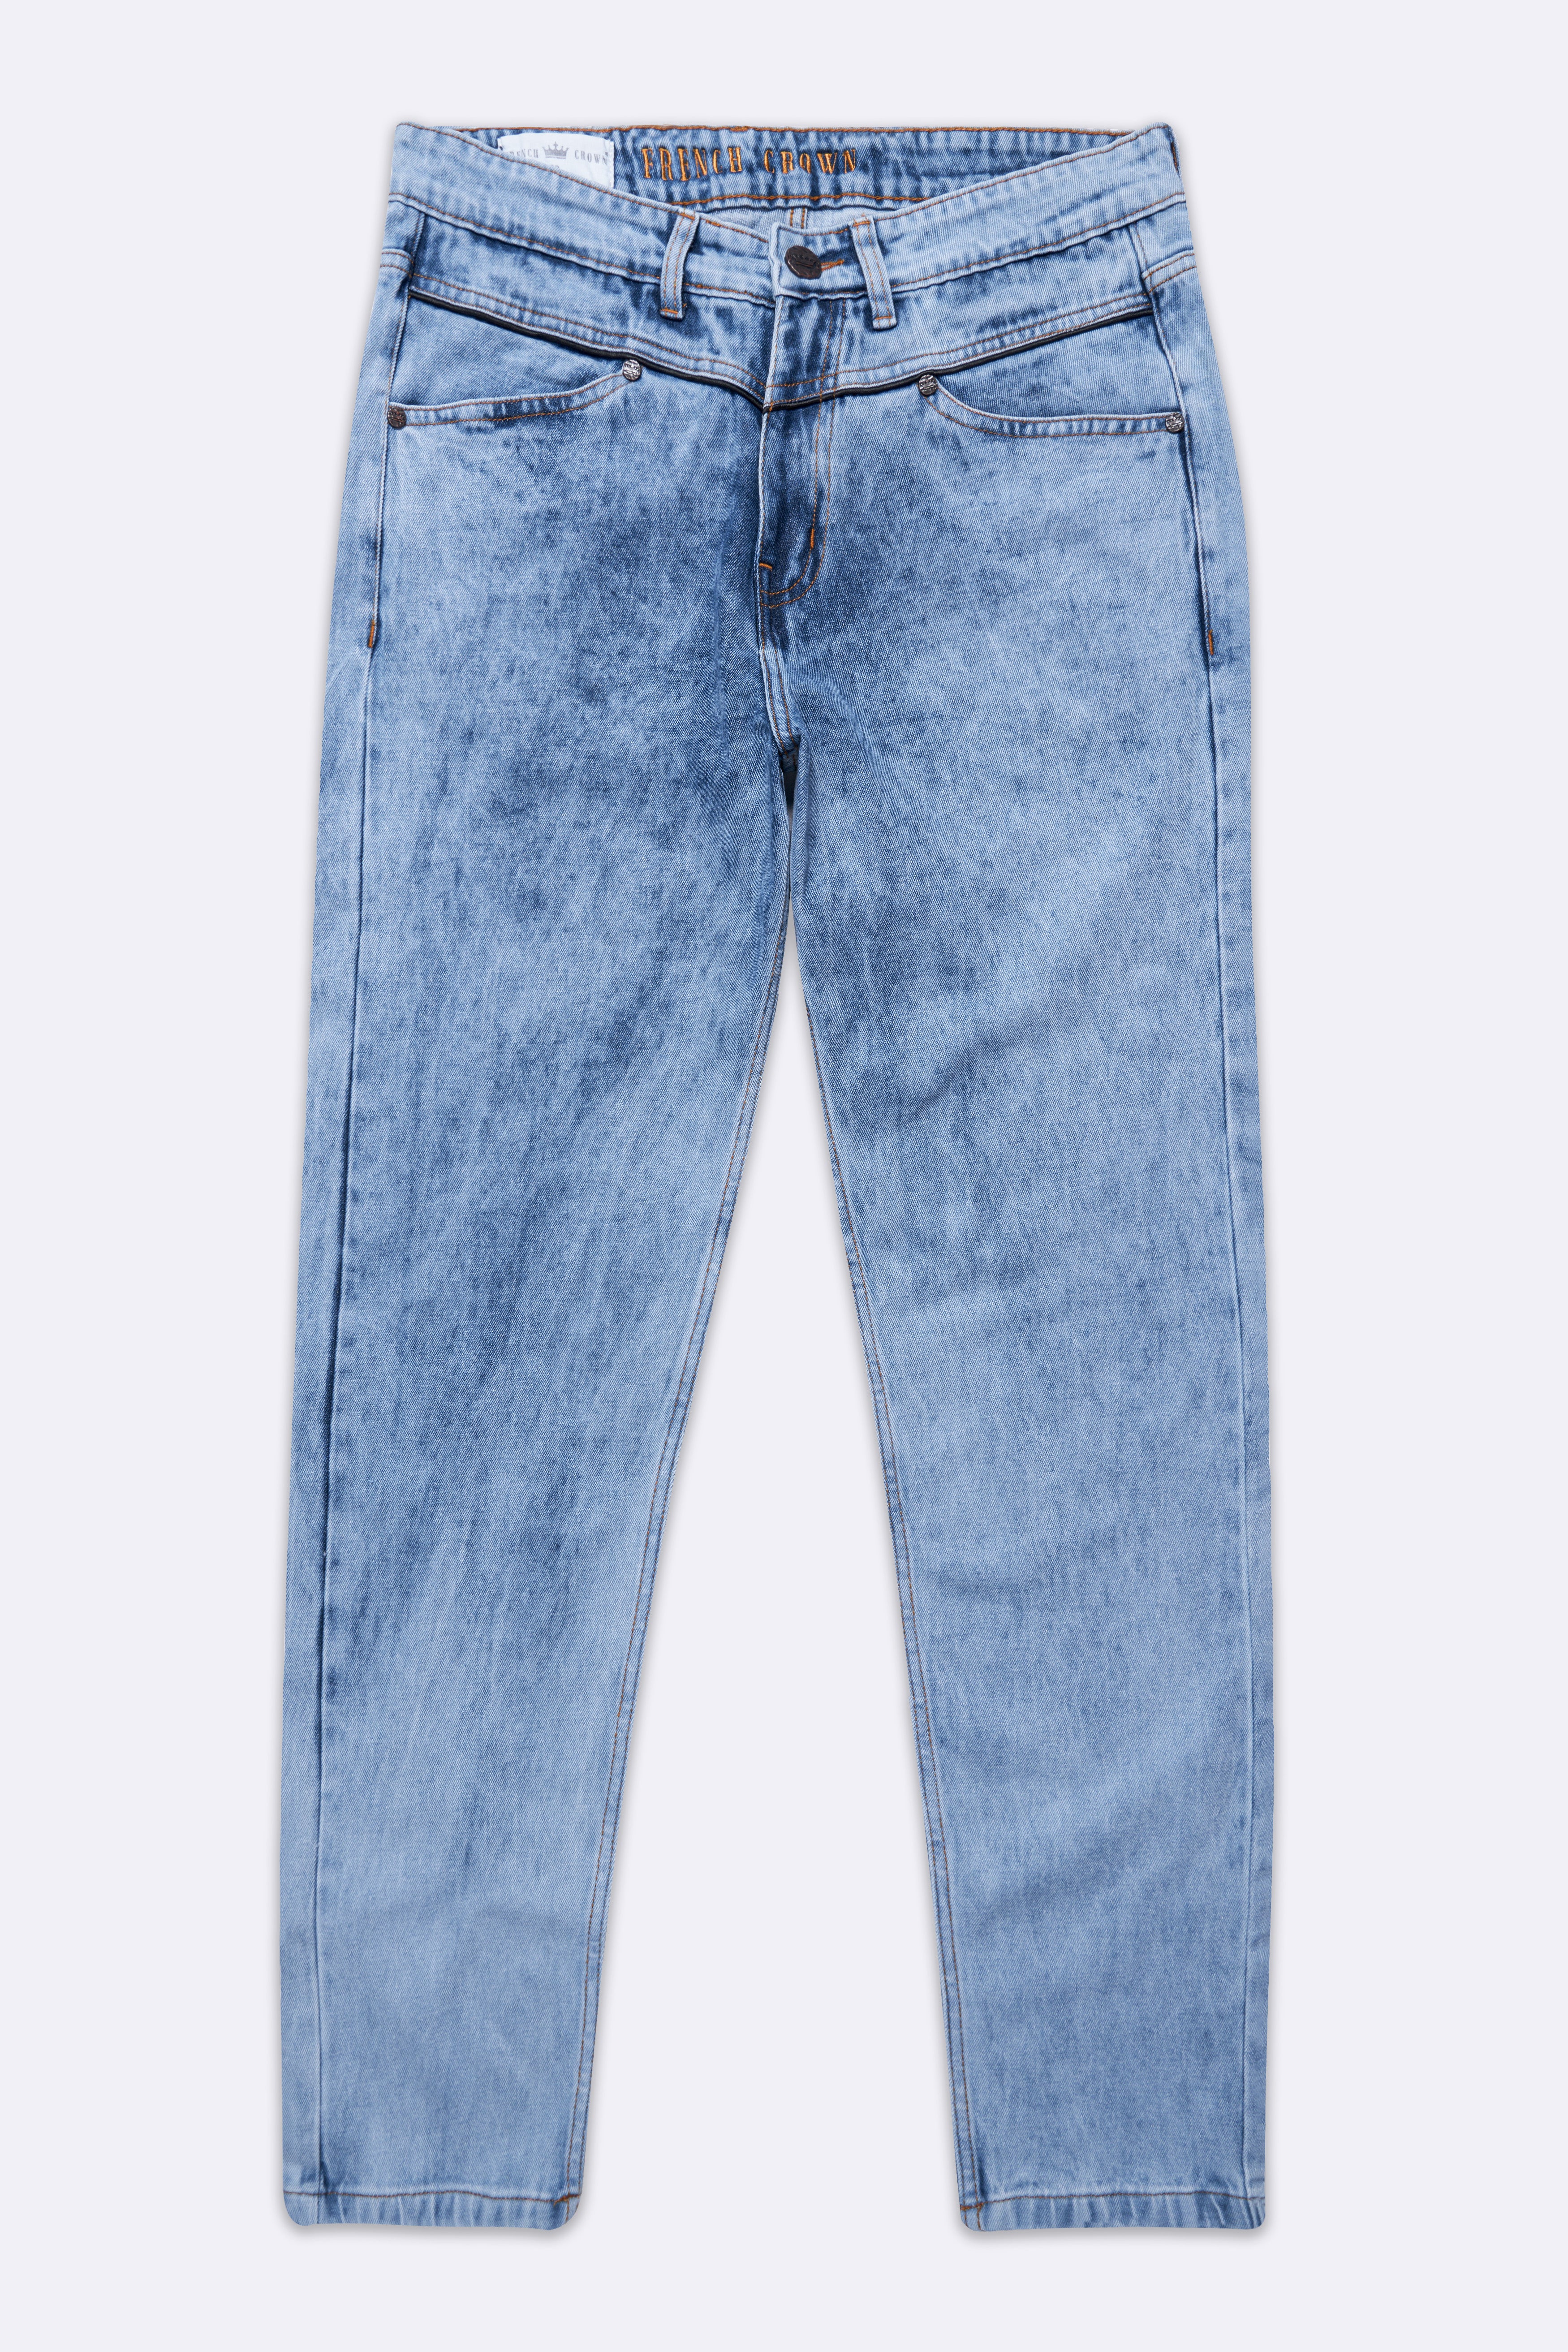 Joe & Co British-Woven Denim Jeans | Grey Fox